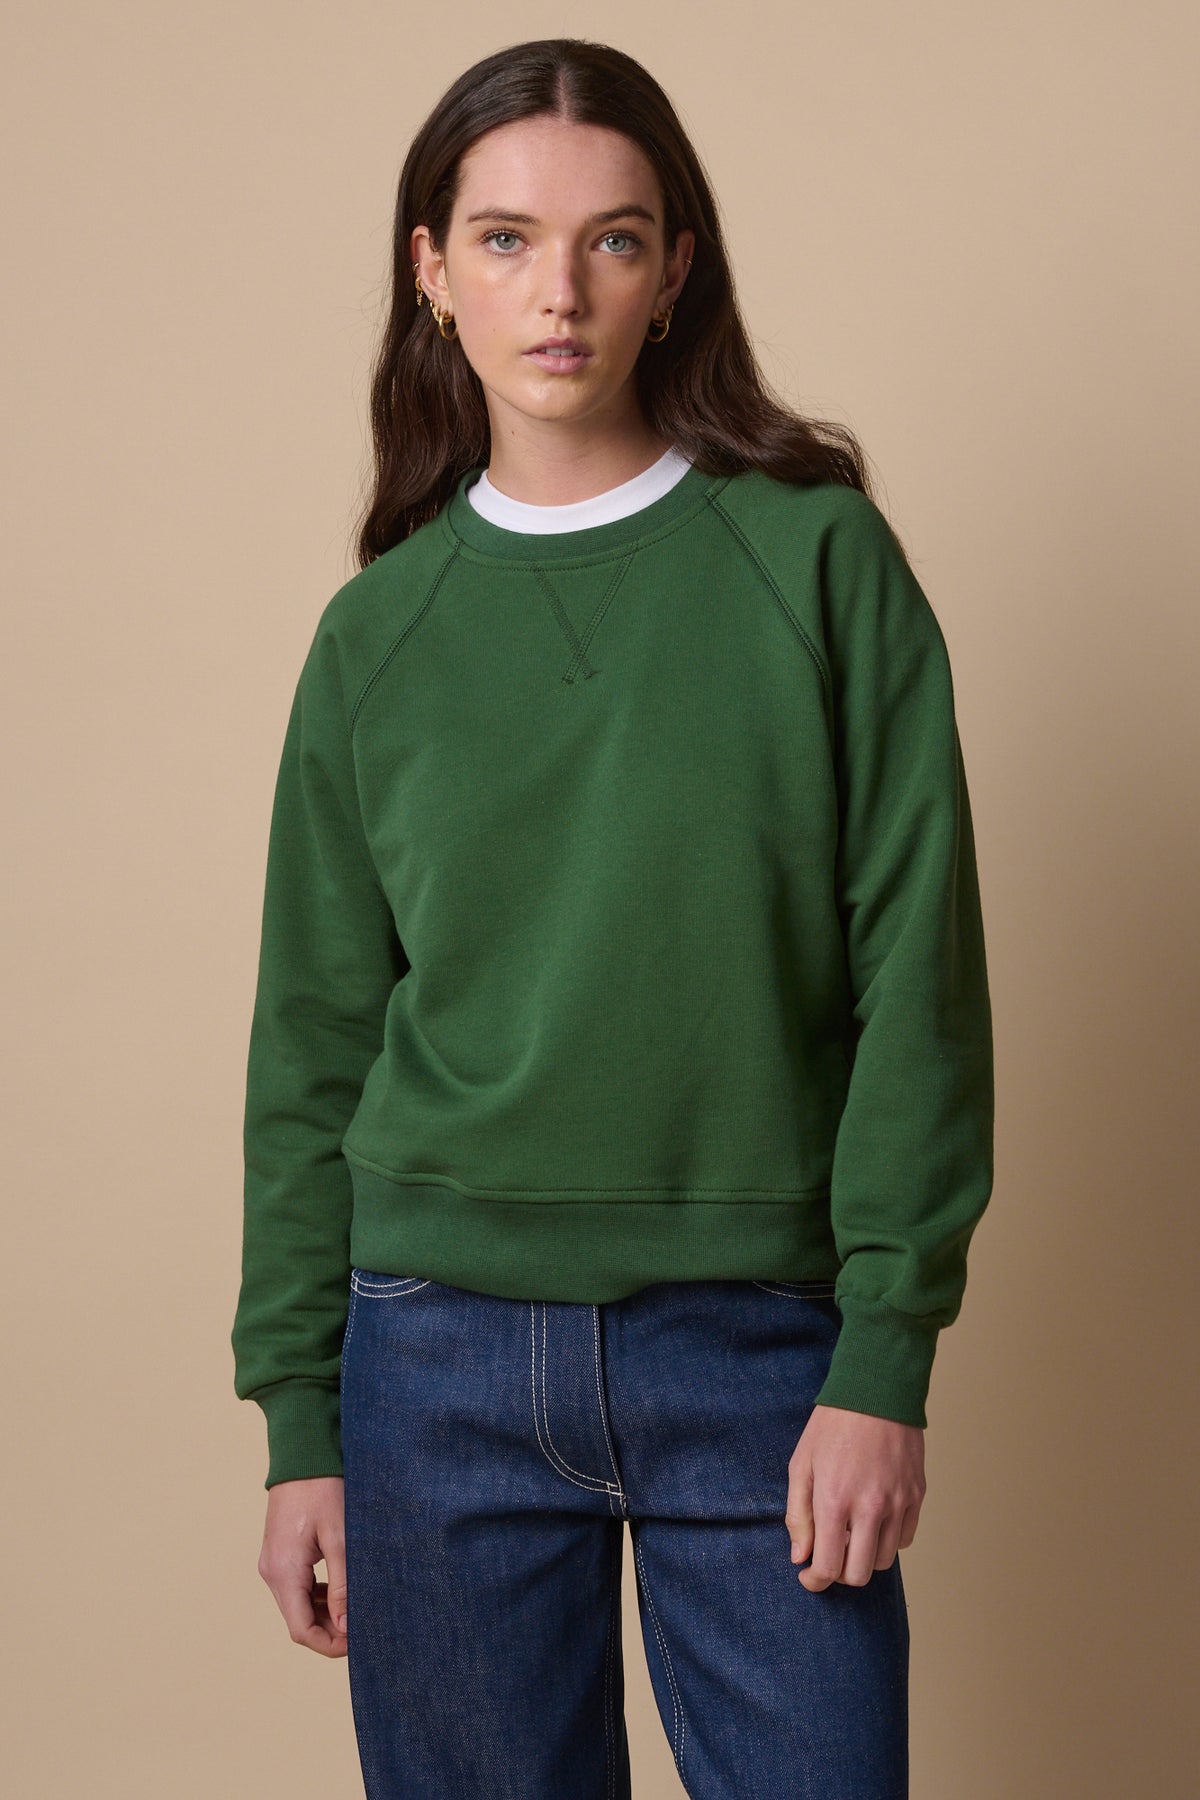 
            Thigh up image of female wearing raglan sweatshirt in bottle green